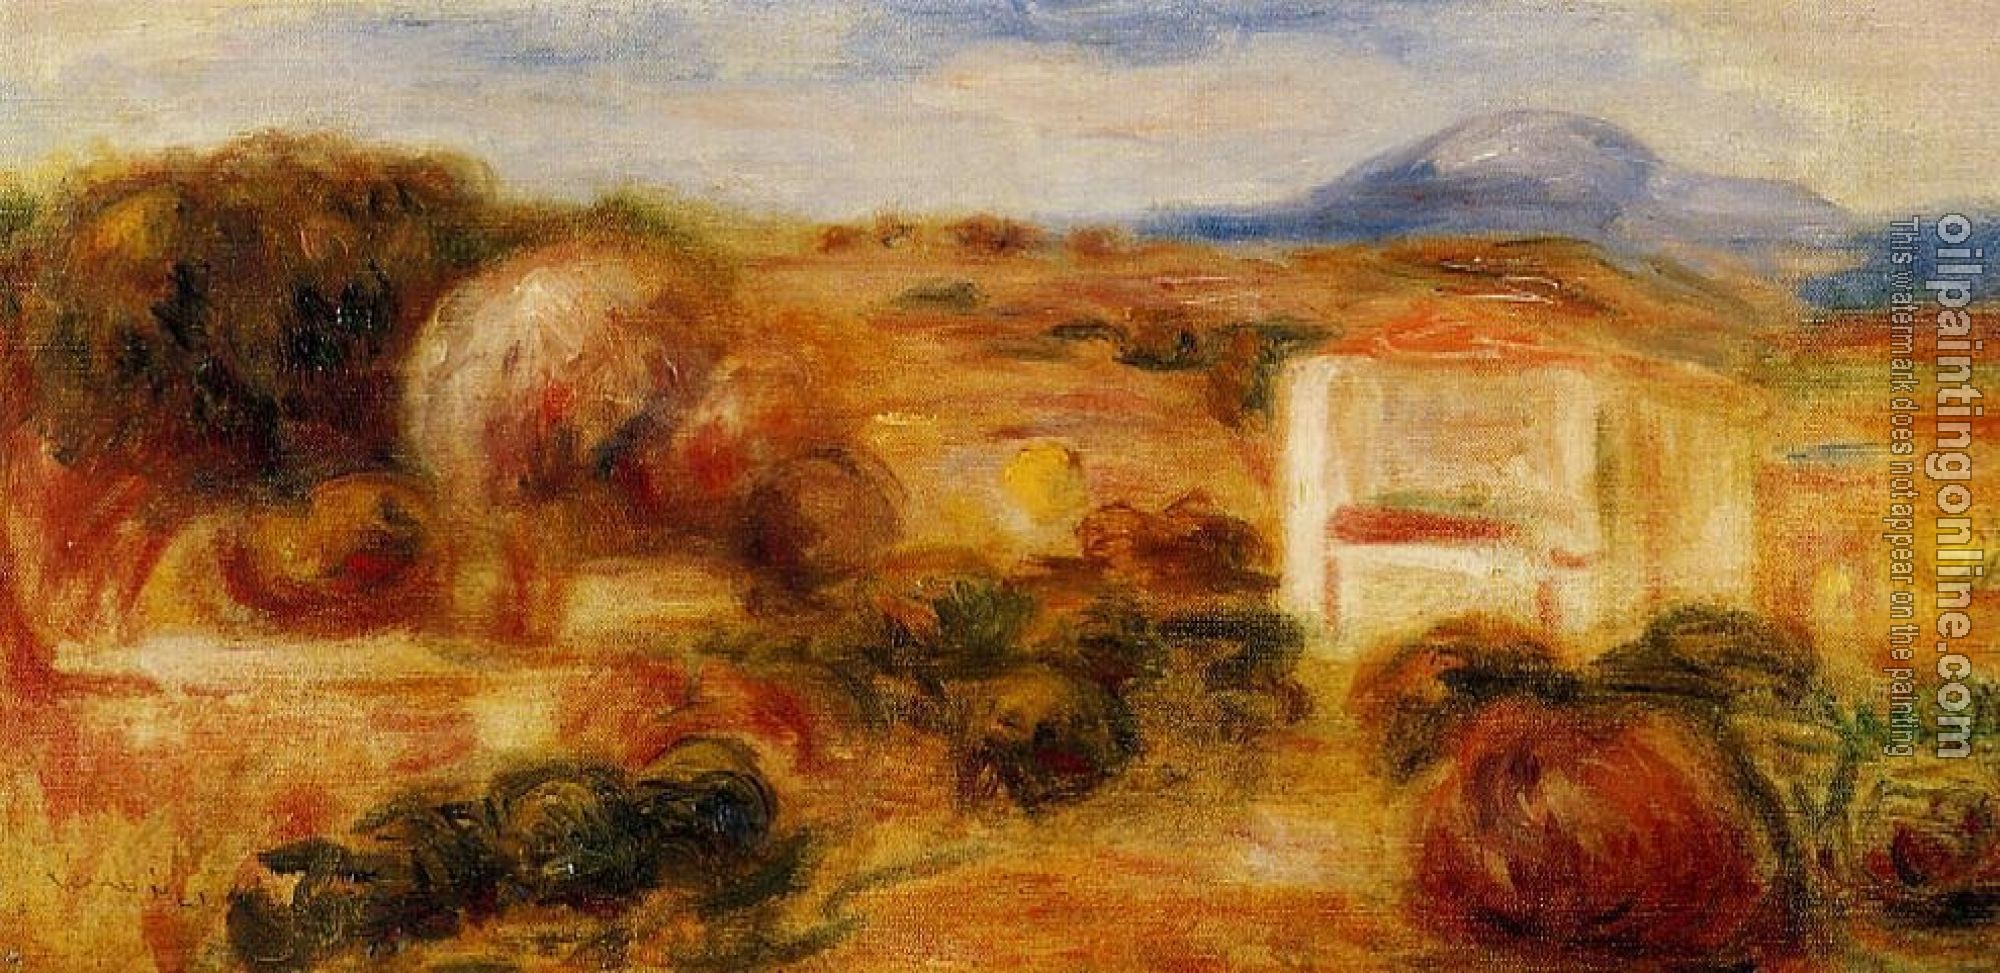 Renoir, Pierre Auguste - Landscape with White House